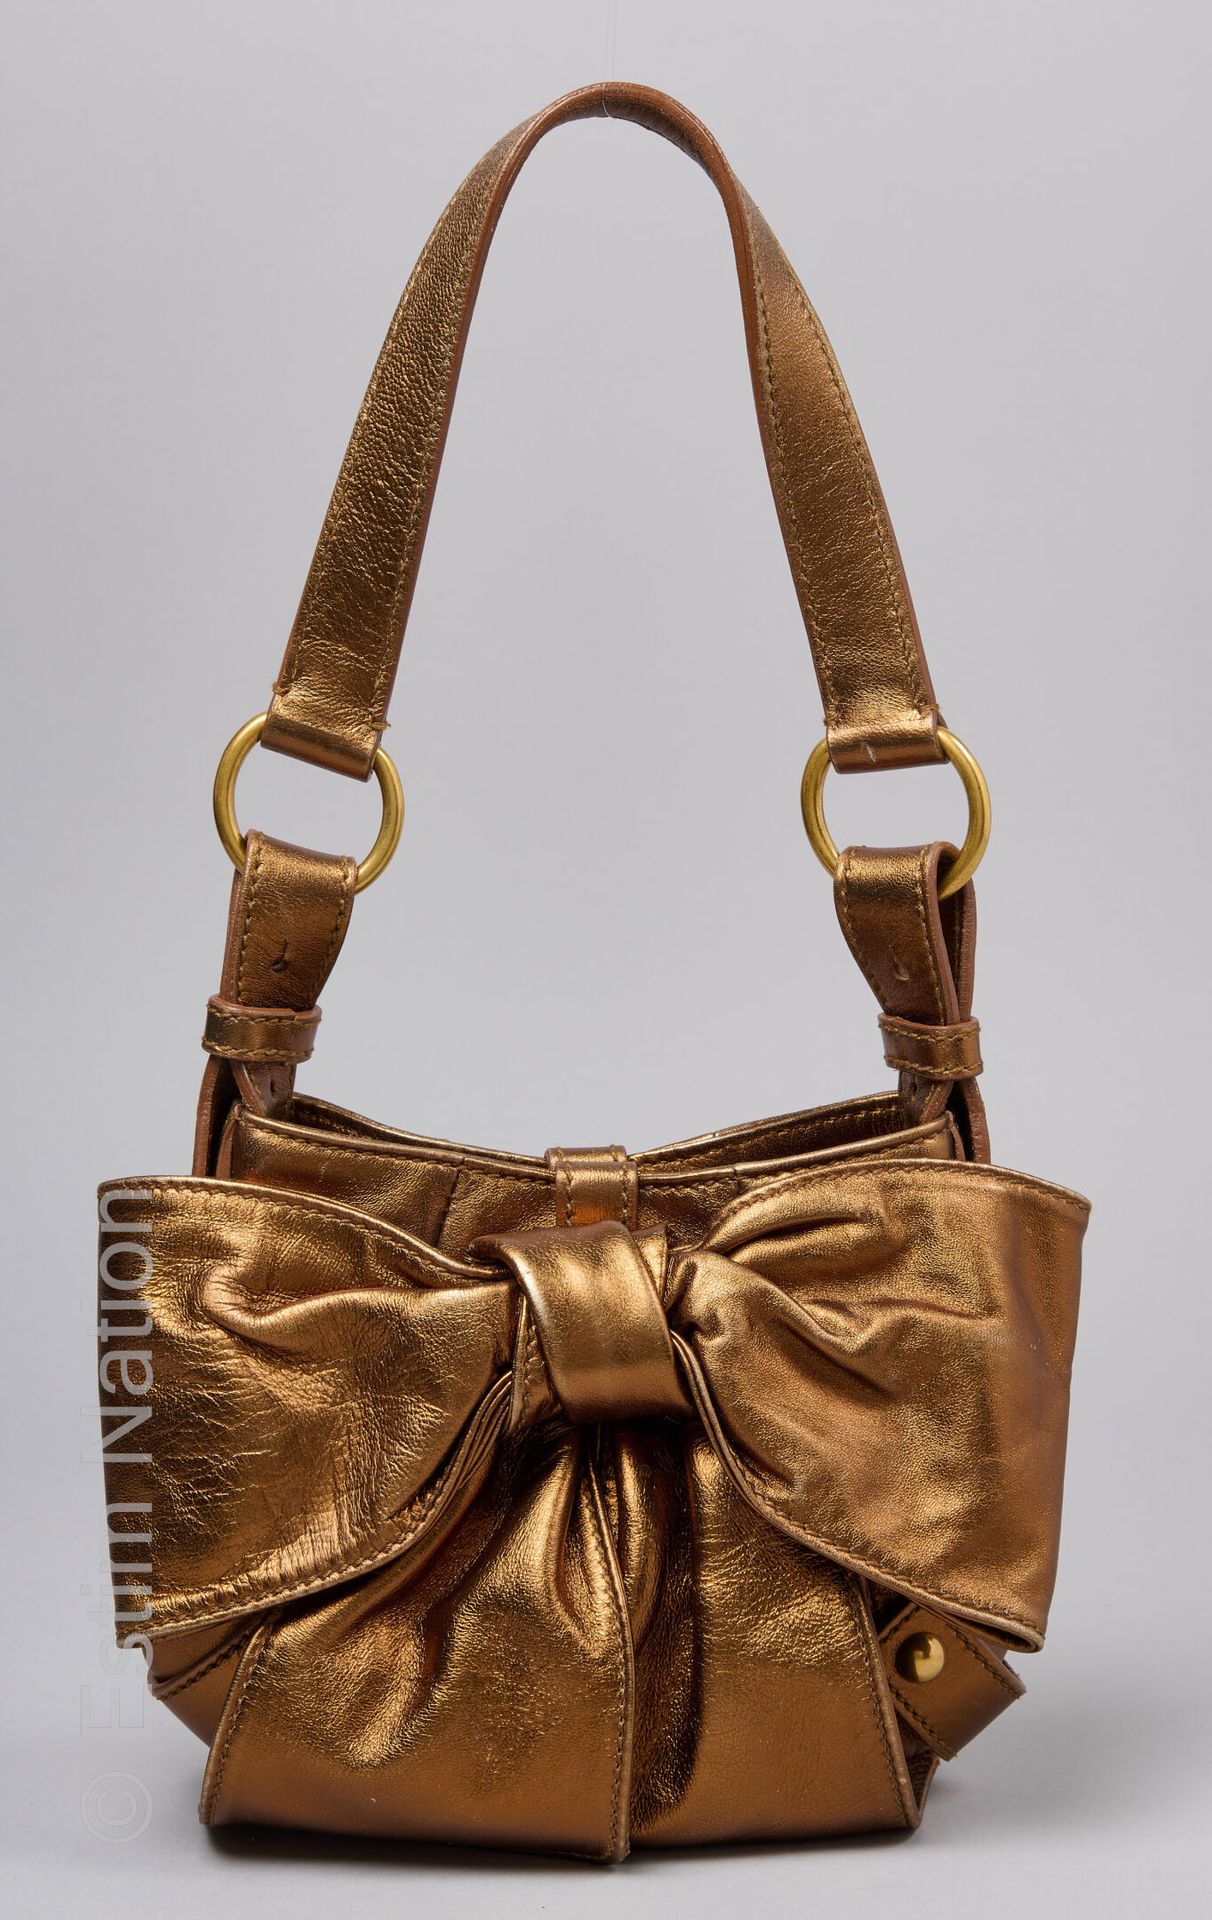 MINI BAG in metallic copper calfskin decorated with a bo… | Drouot.com